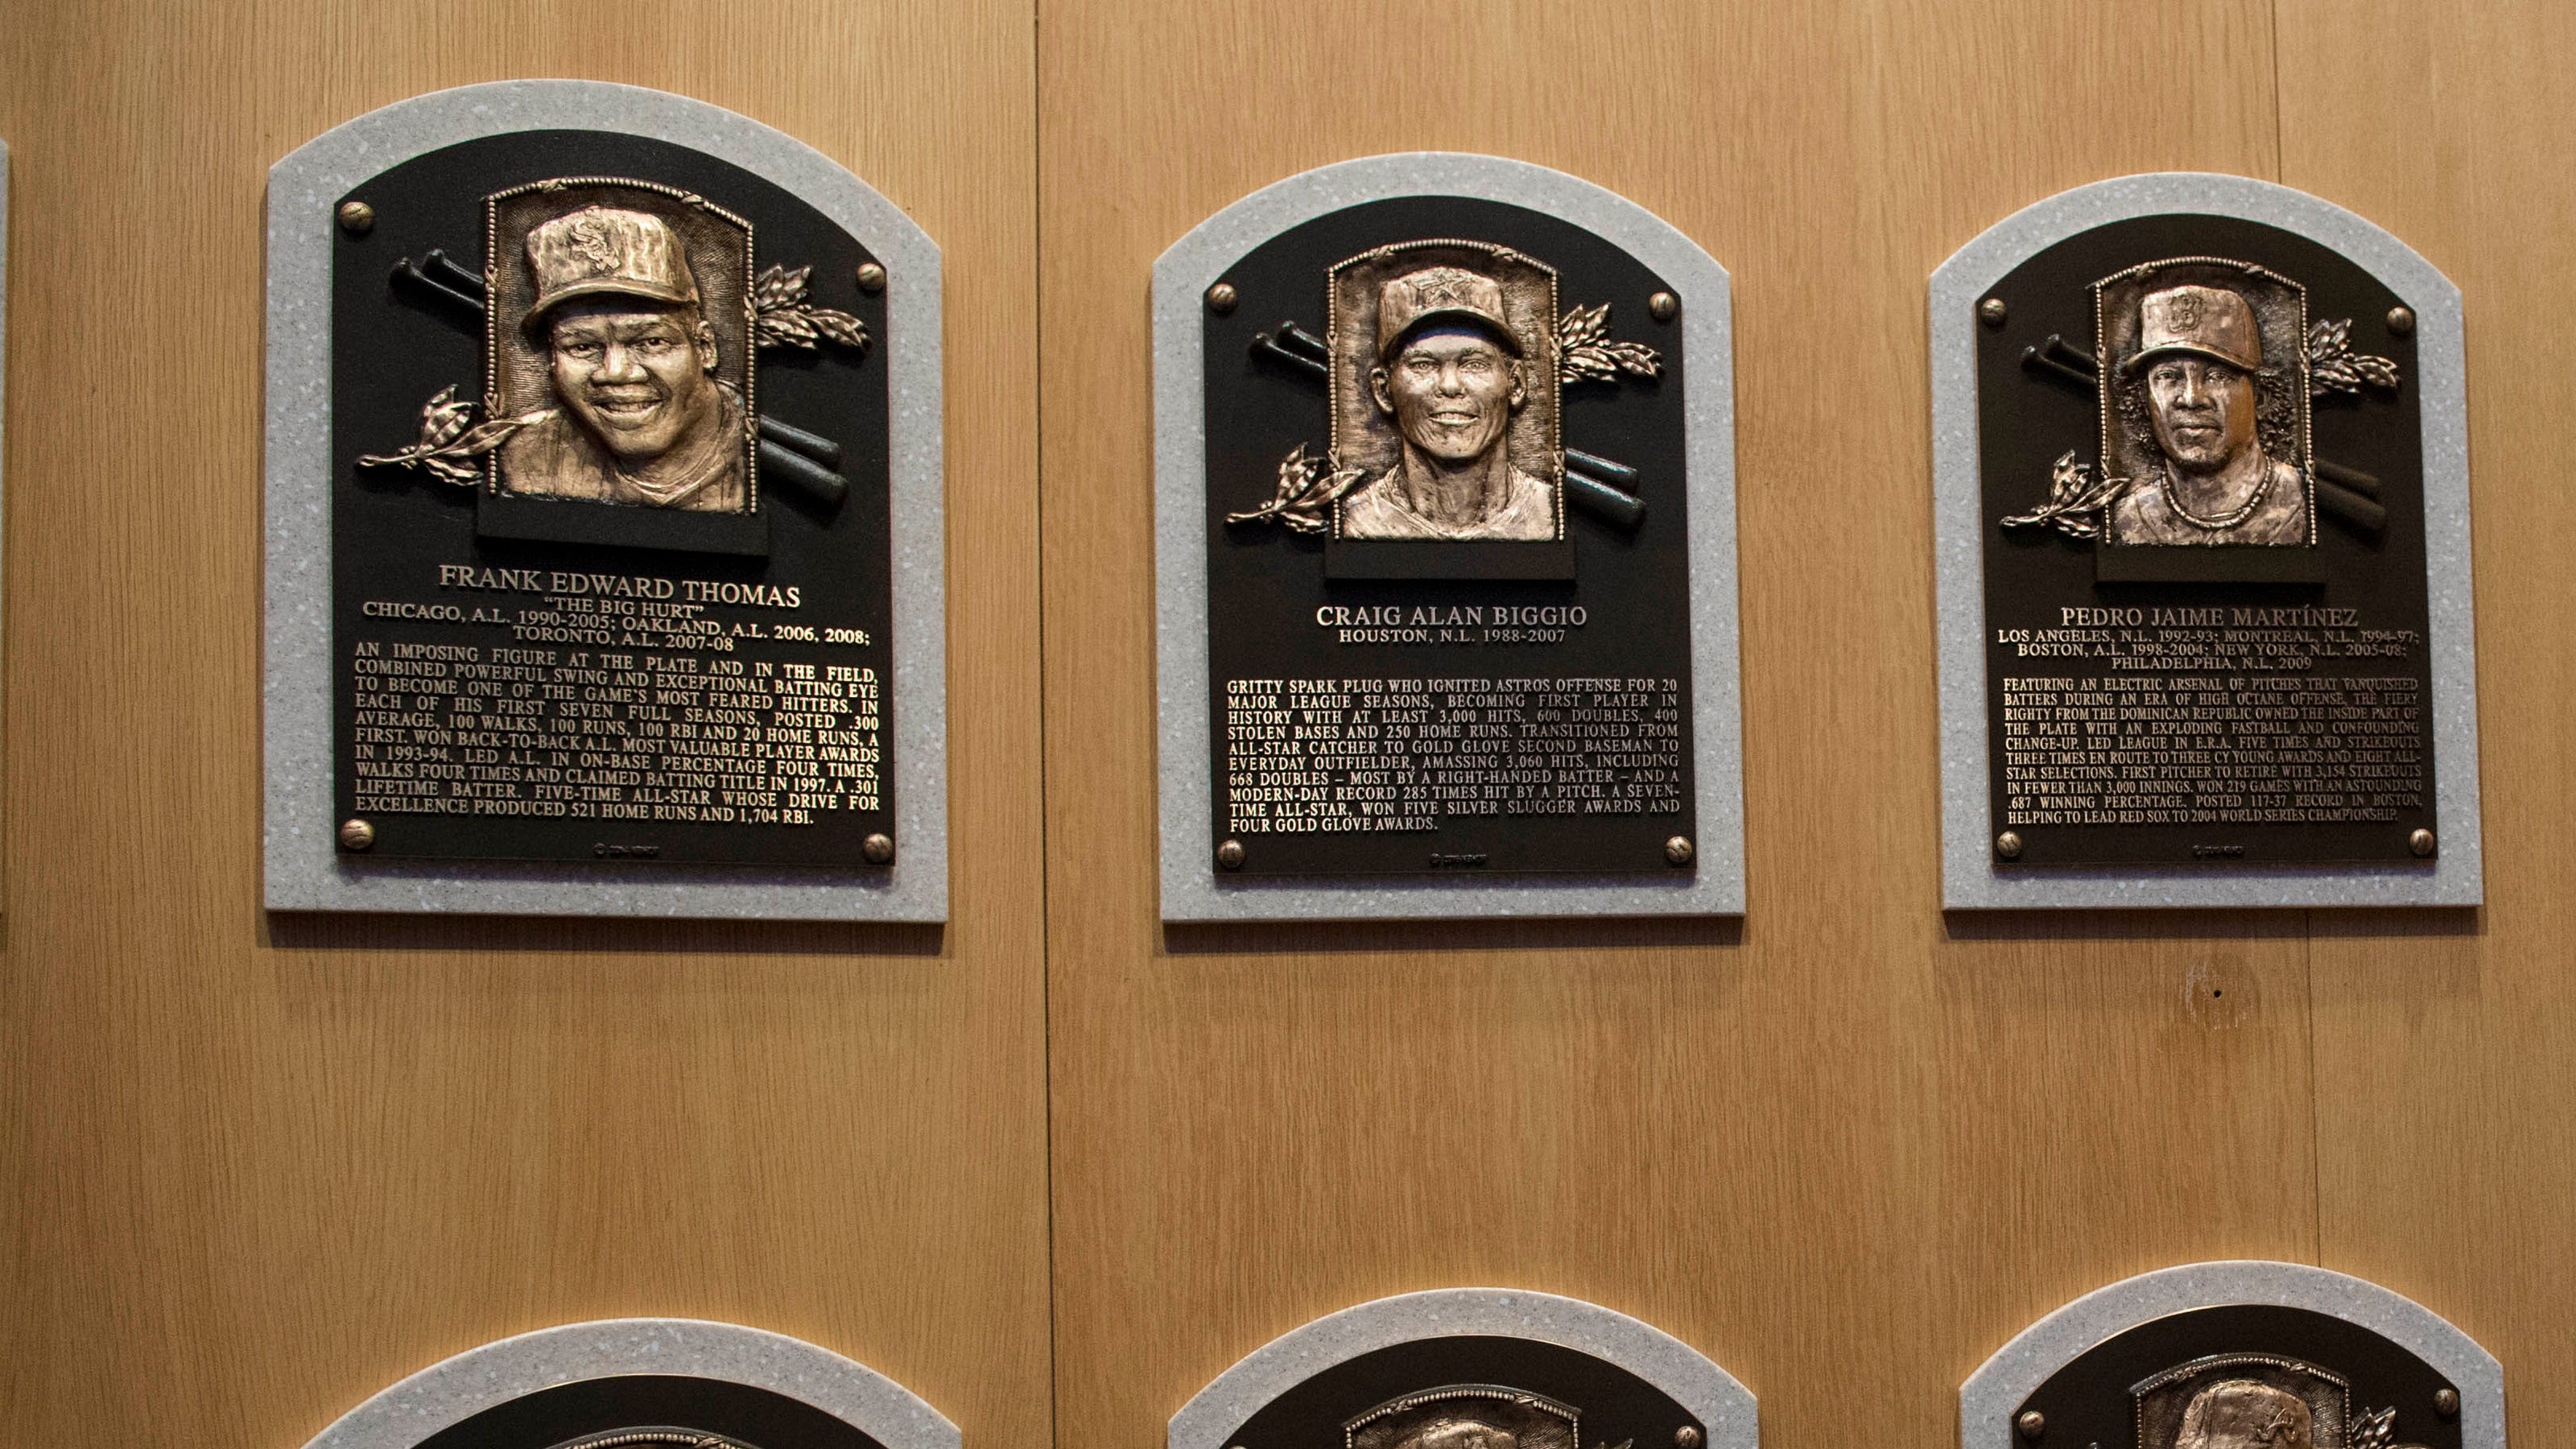 2017 Baseball Hall of Fame candidates